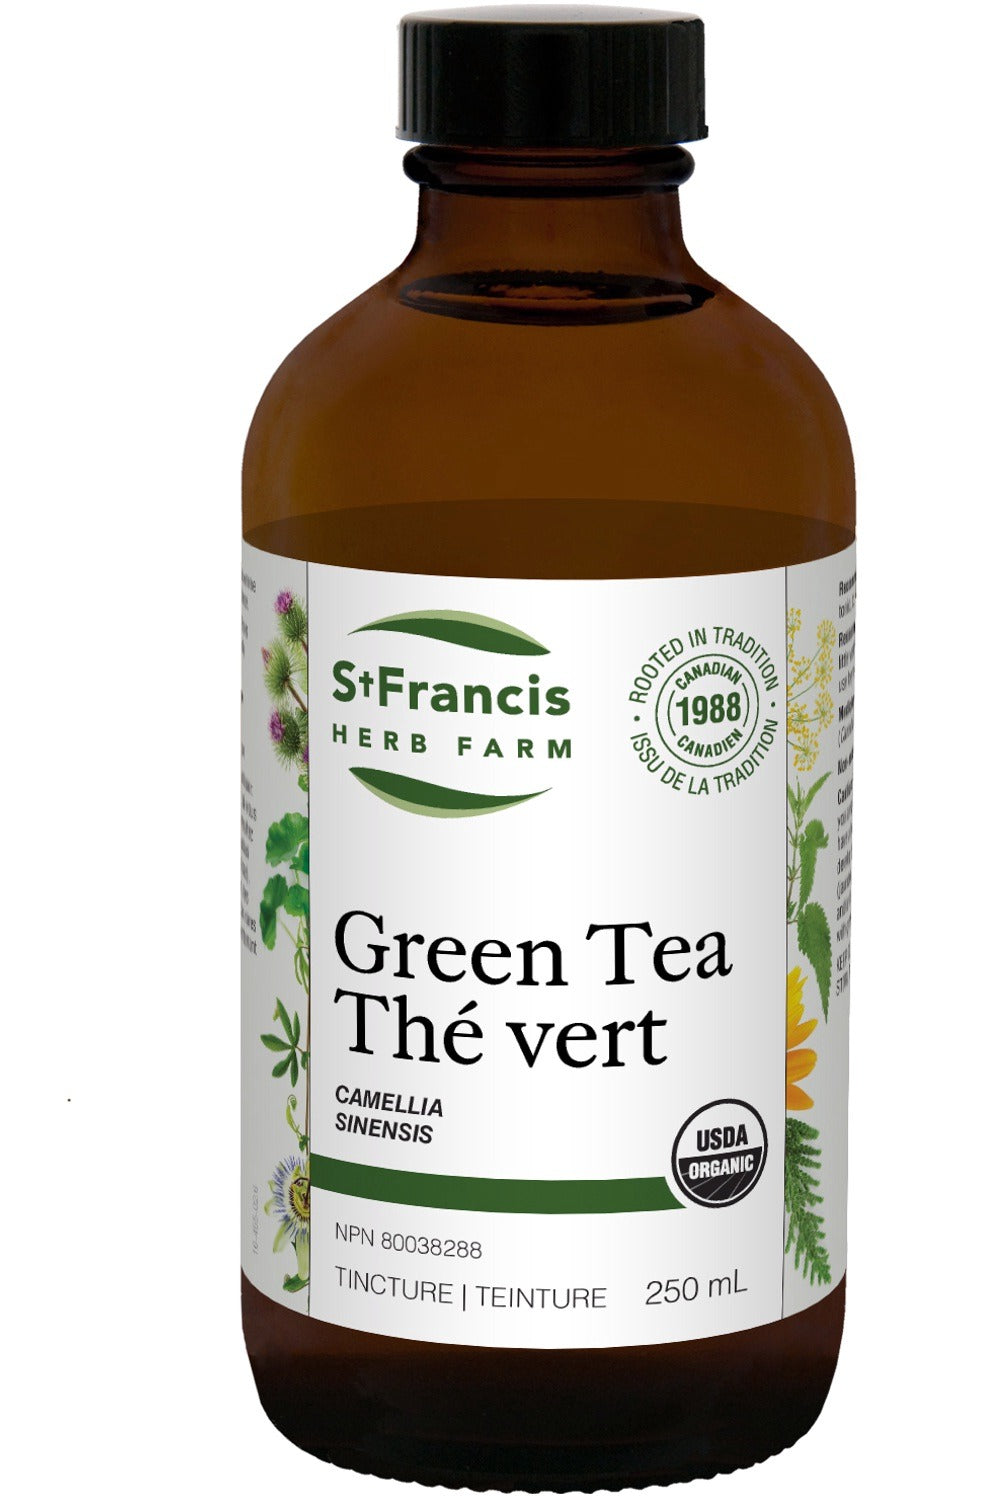 ST FRANCIS HERB FARM Green Tea (250 ml)